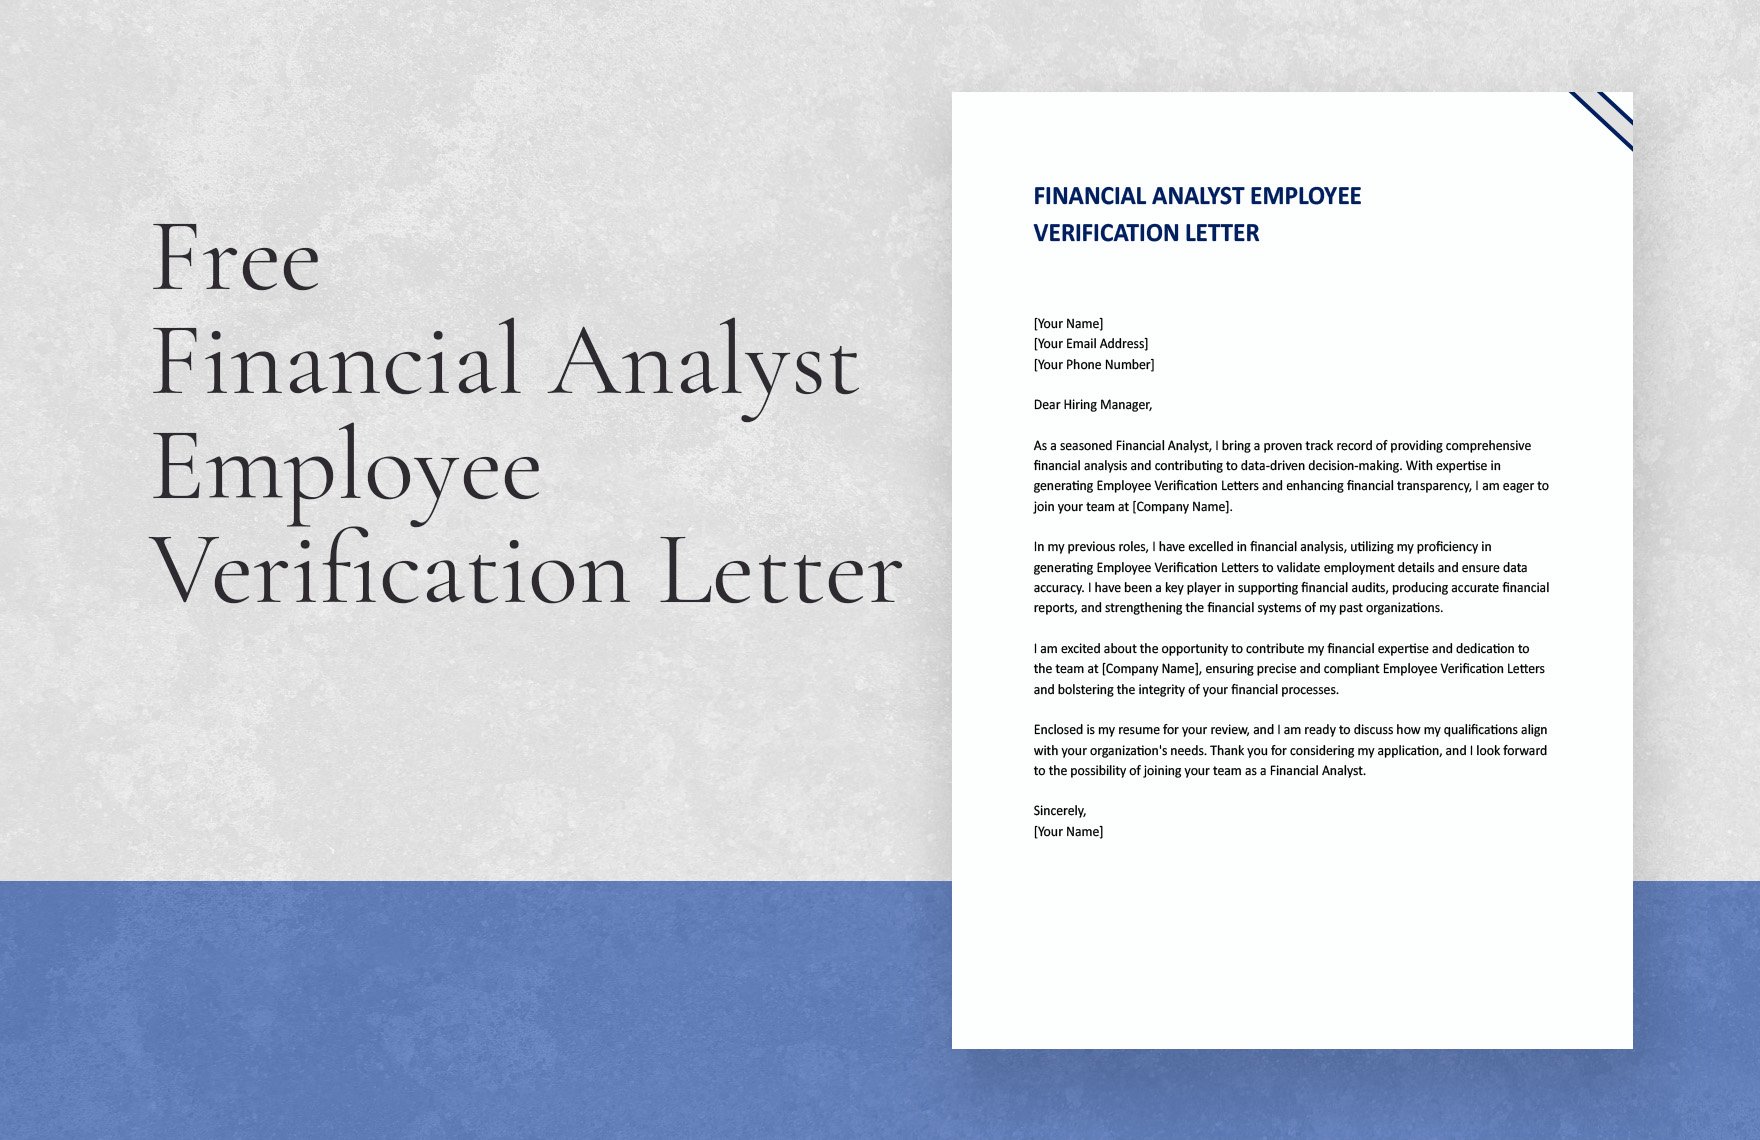 Financial Analyst Employee Verification Letter